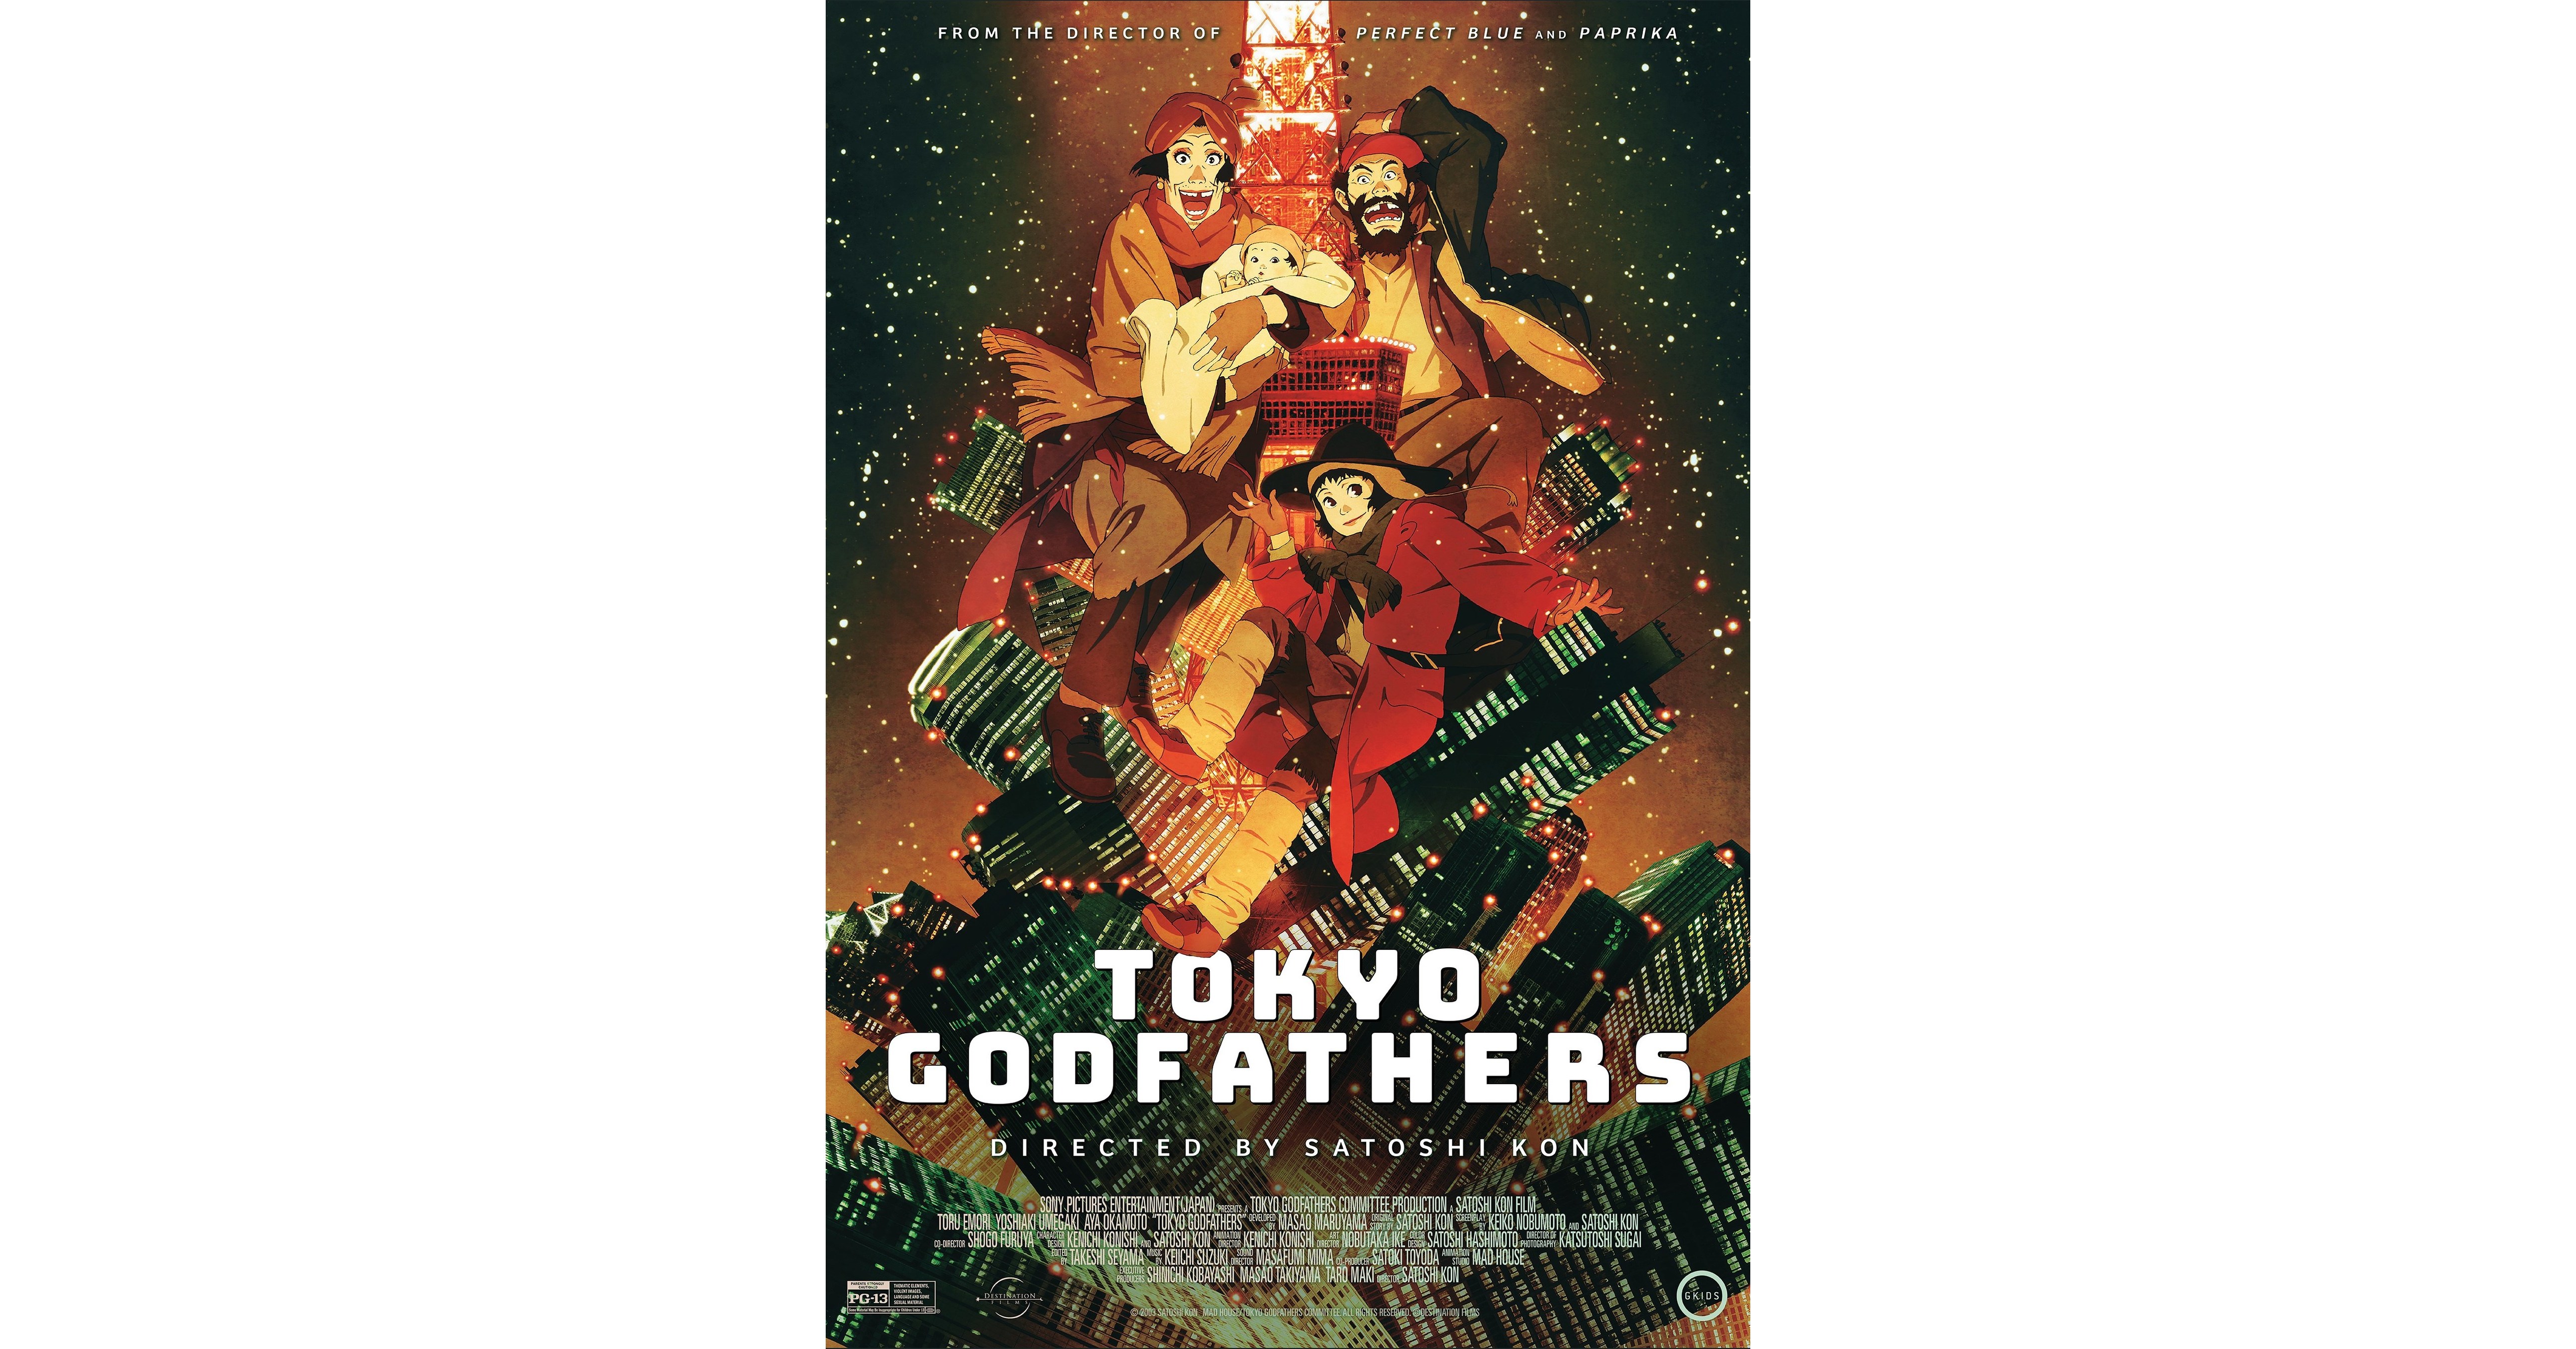 Satoshi Kon's Classic Animated Feature 'Tokyo Godfathers' Comes to